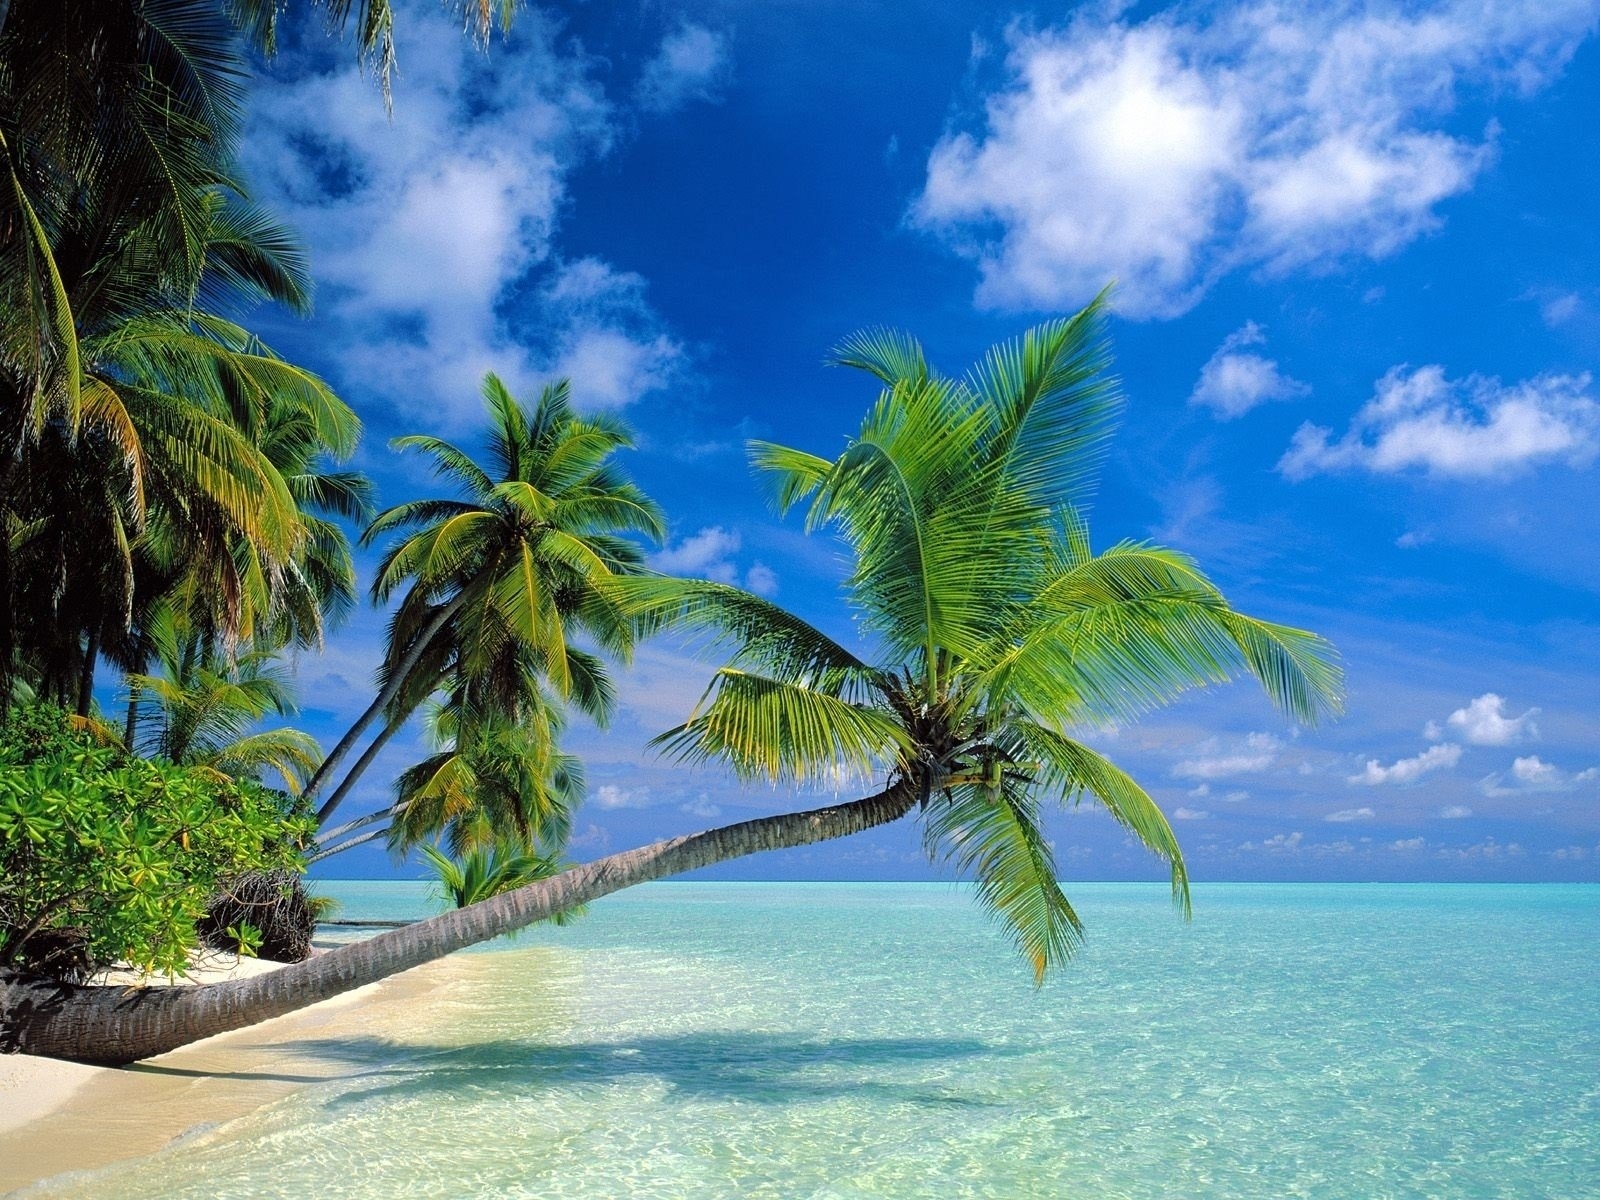 10 Best Ocean Beach Hd Wallpaper FULL HD 1080p For PC ...